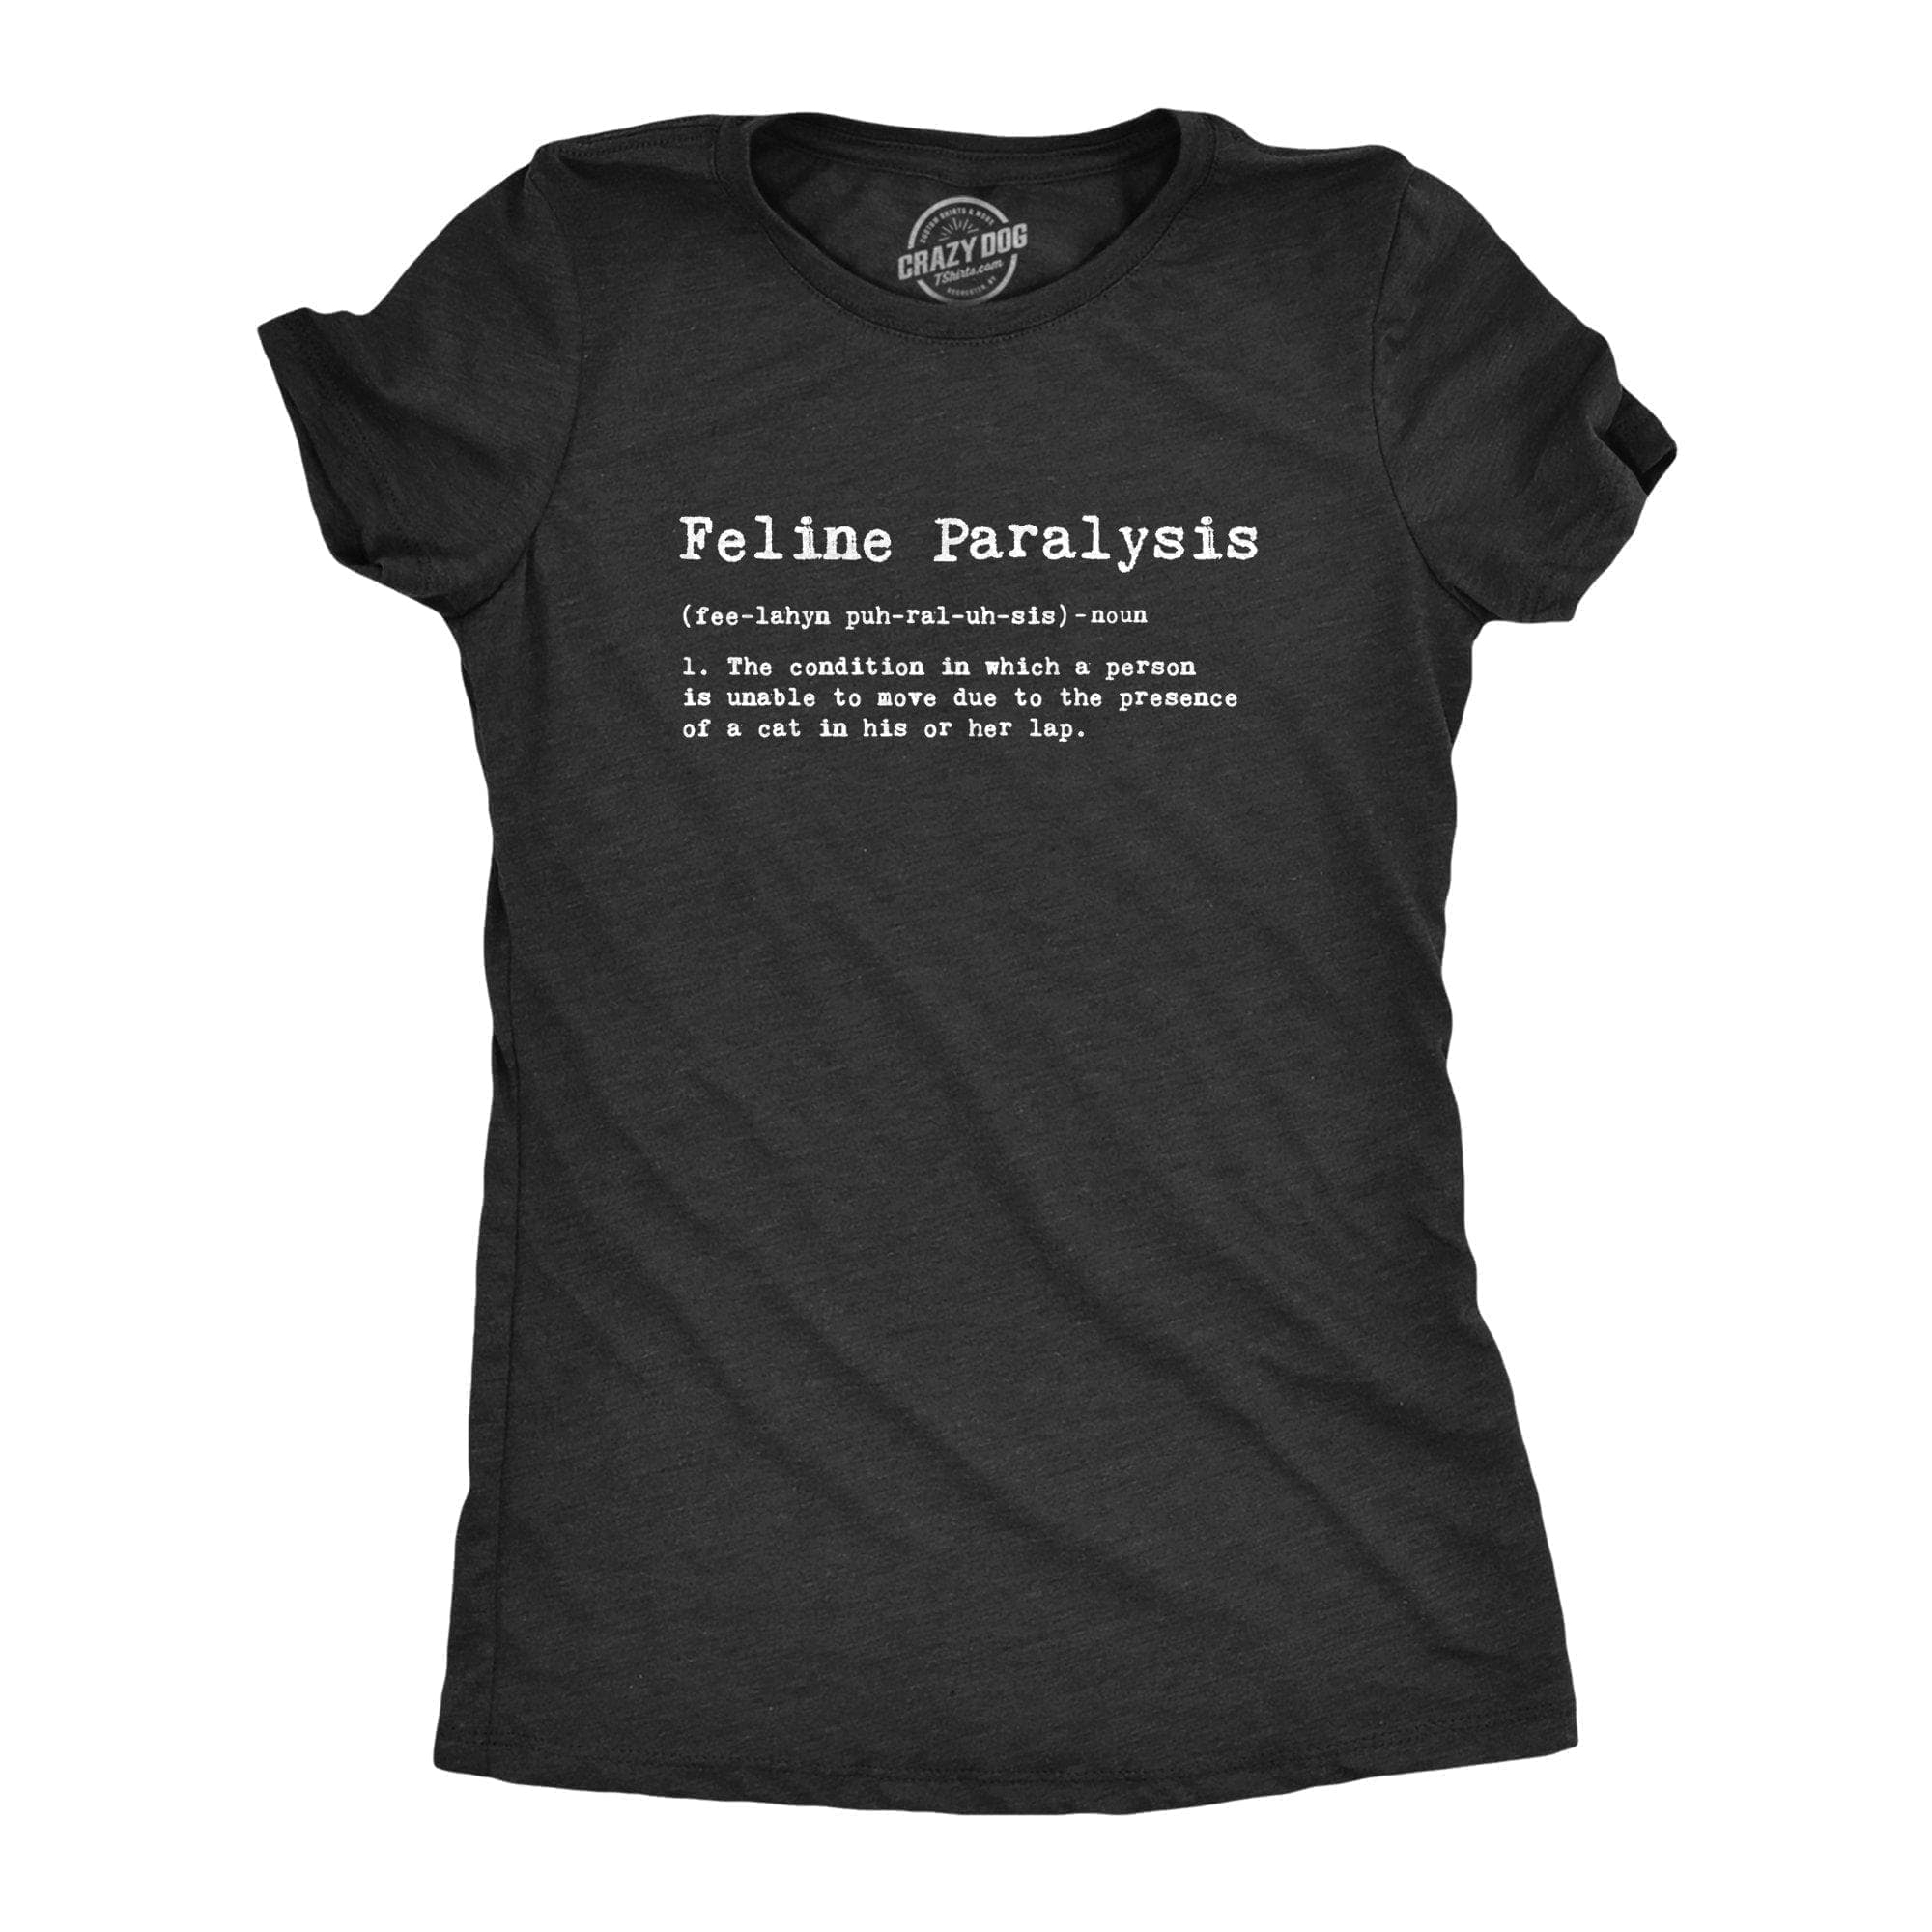 Feline Paralysis Women's Tshirt - Crazy Dog T-Shirts